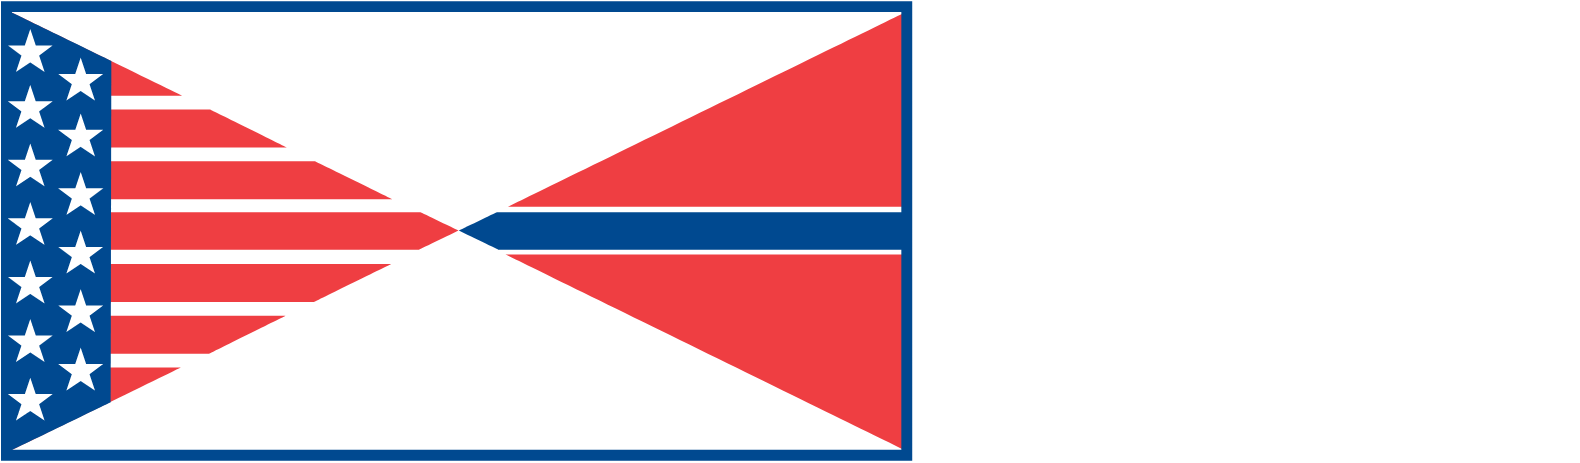 Nordic American Tankers logo grand pour les fonds sombres (PNG transparent)